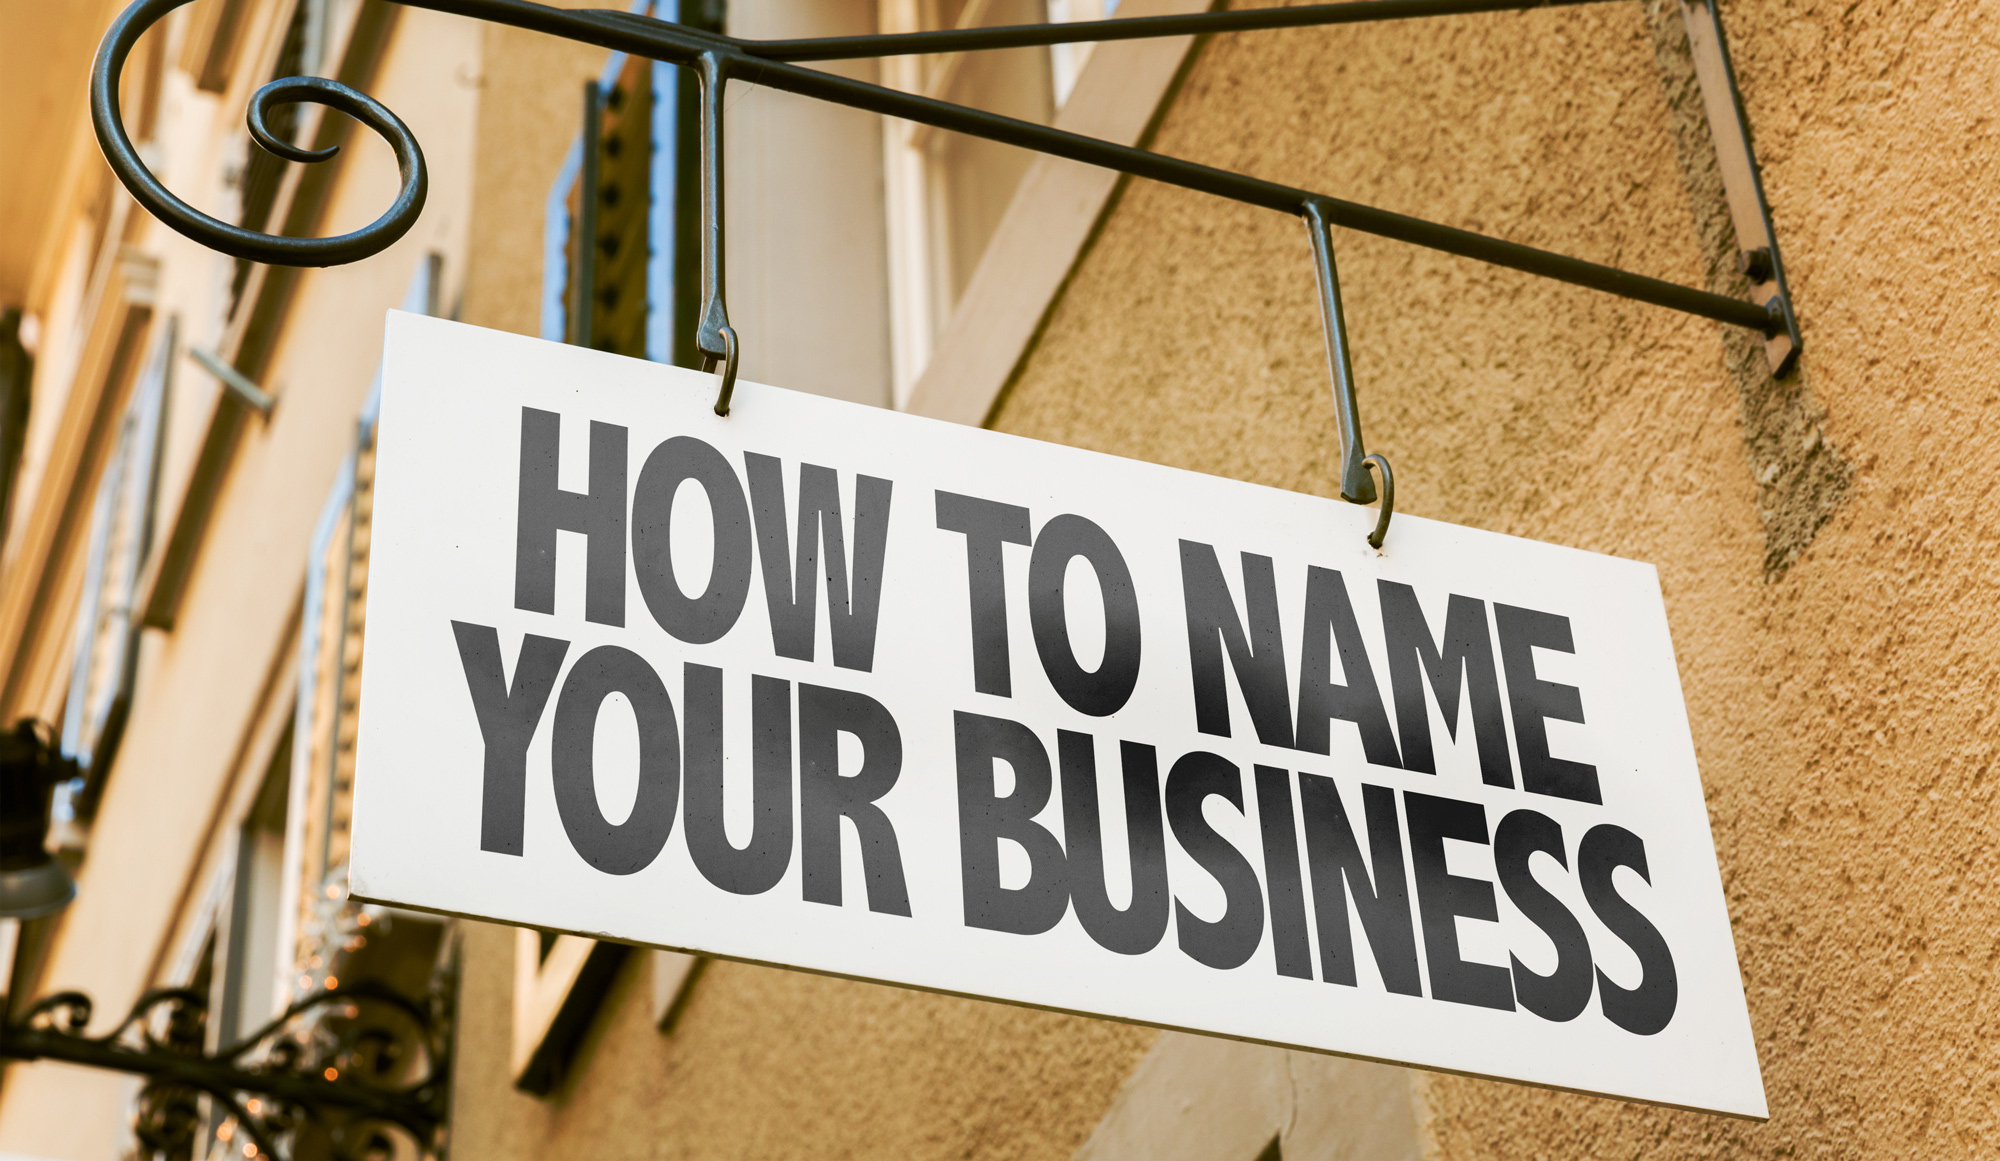 Choosing business name